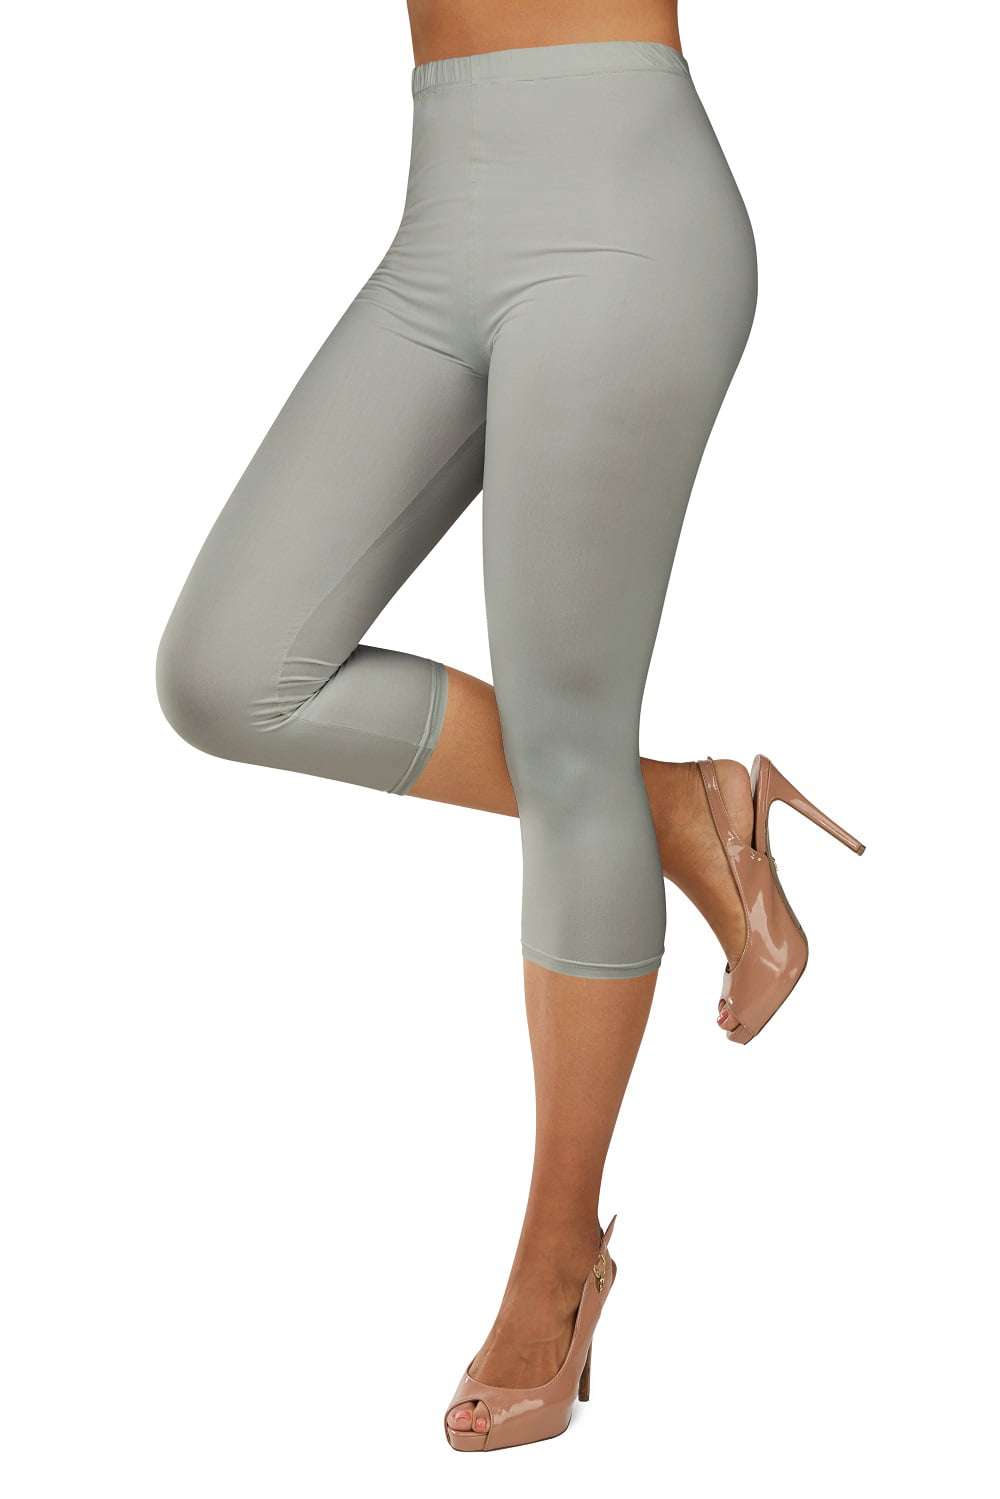 Women's Capri Butter Leggings Athleisure Wear Capri Pants w Pockets Size  S-3X